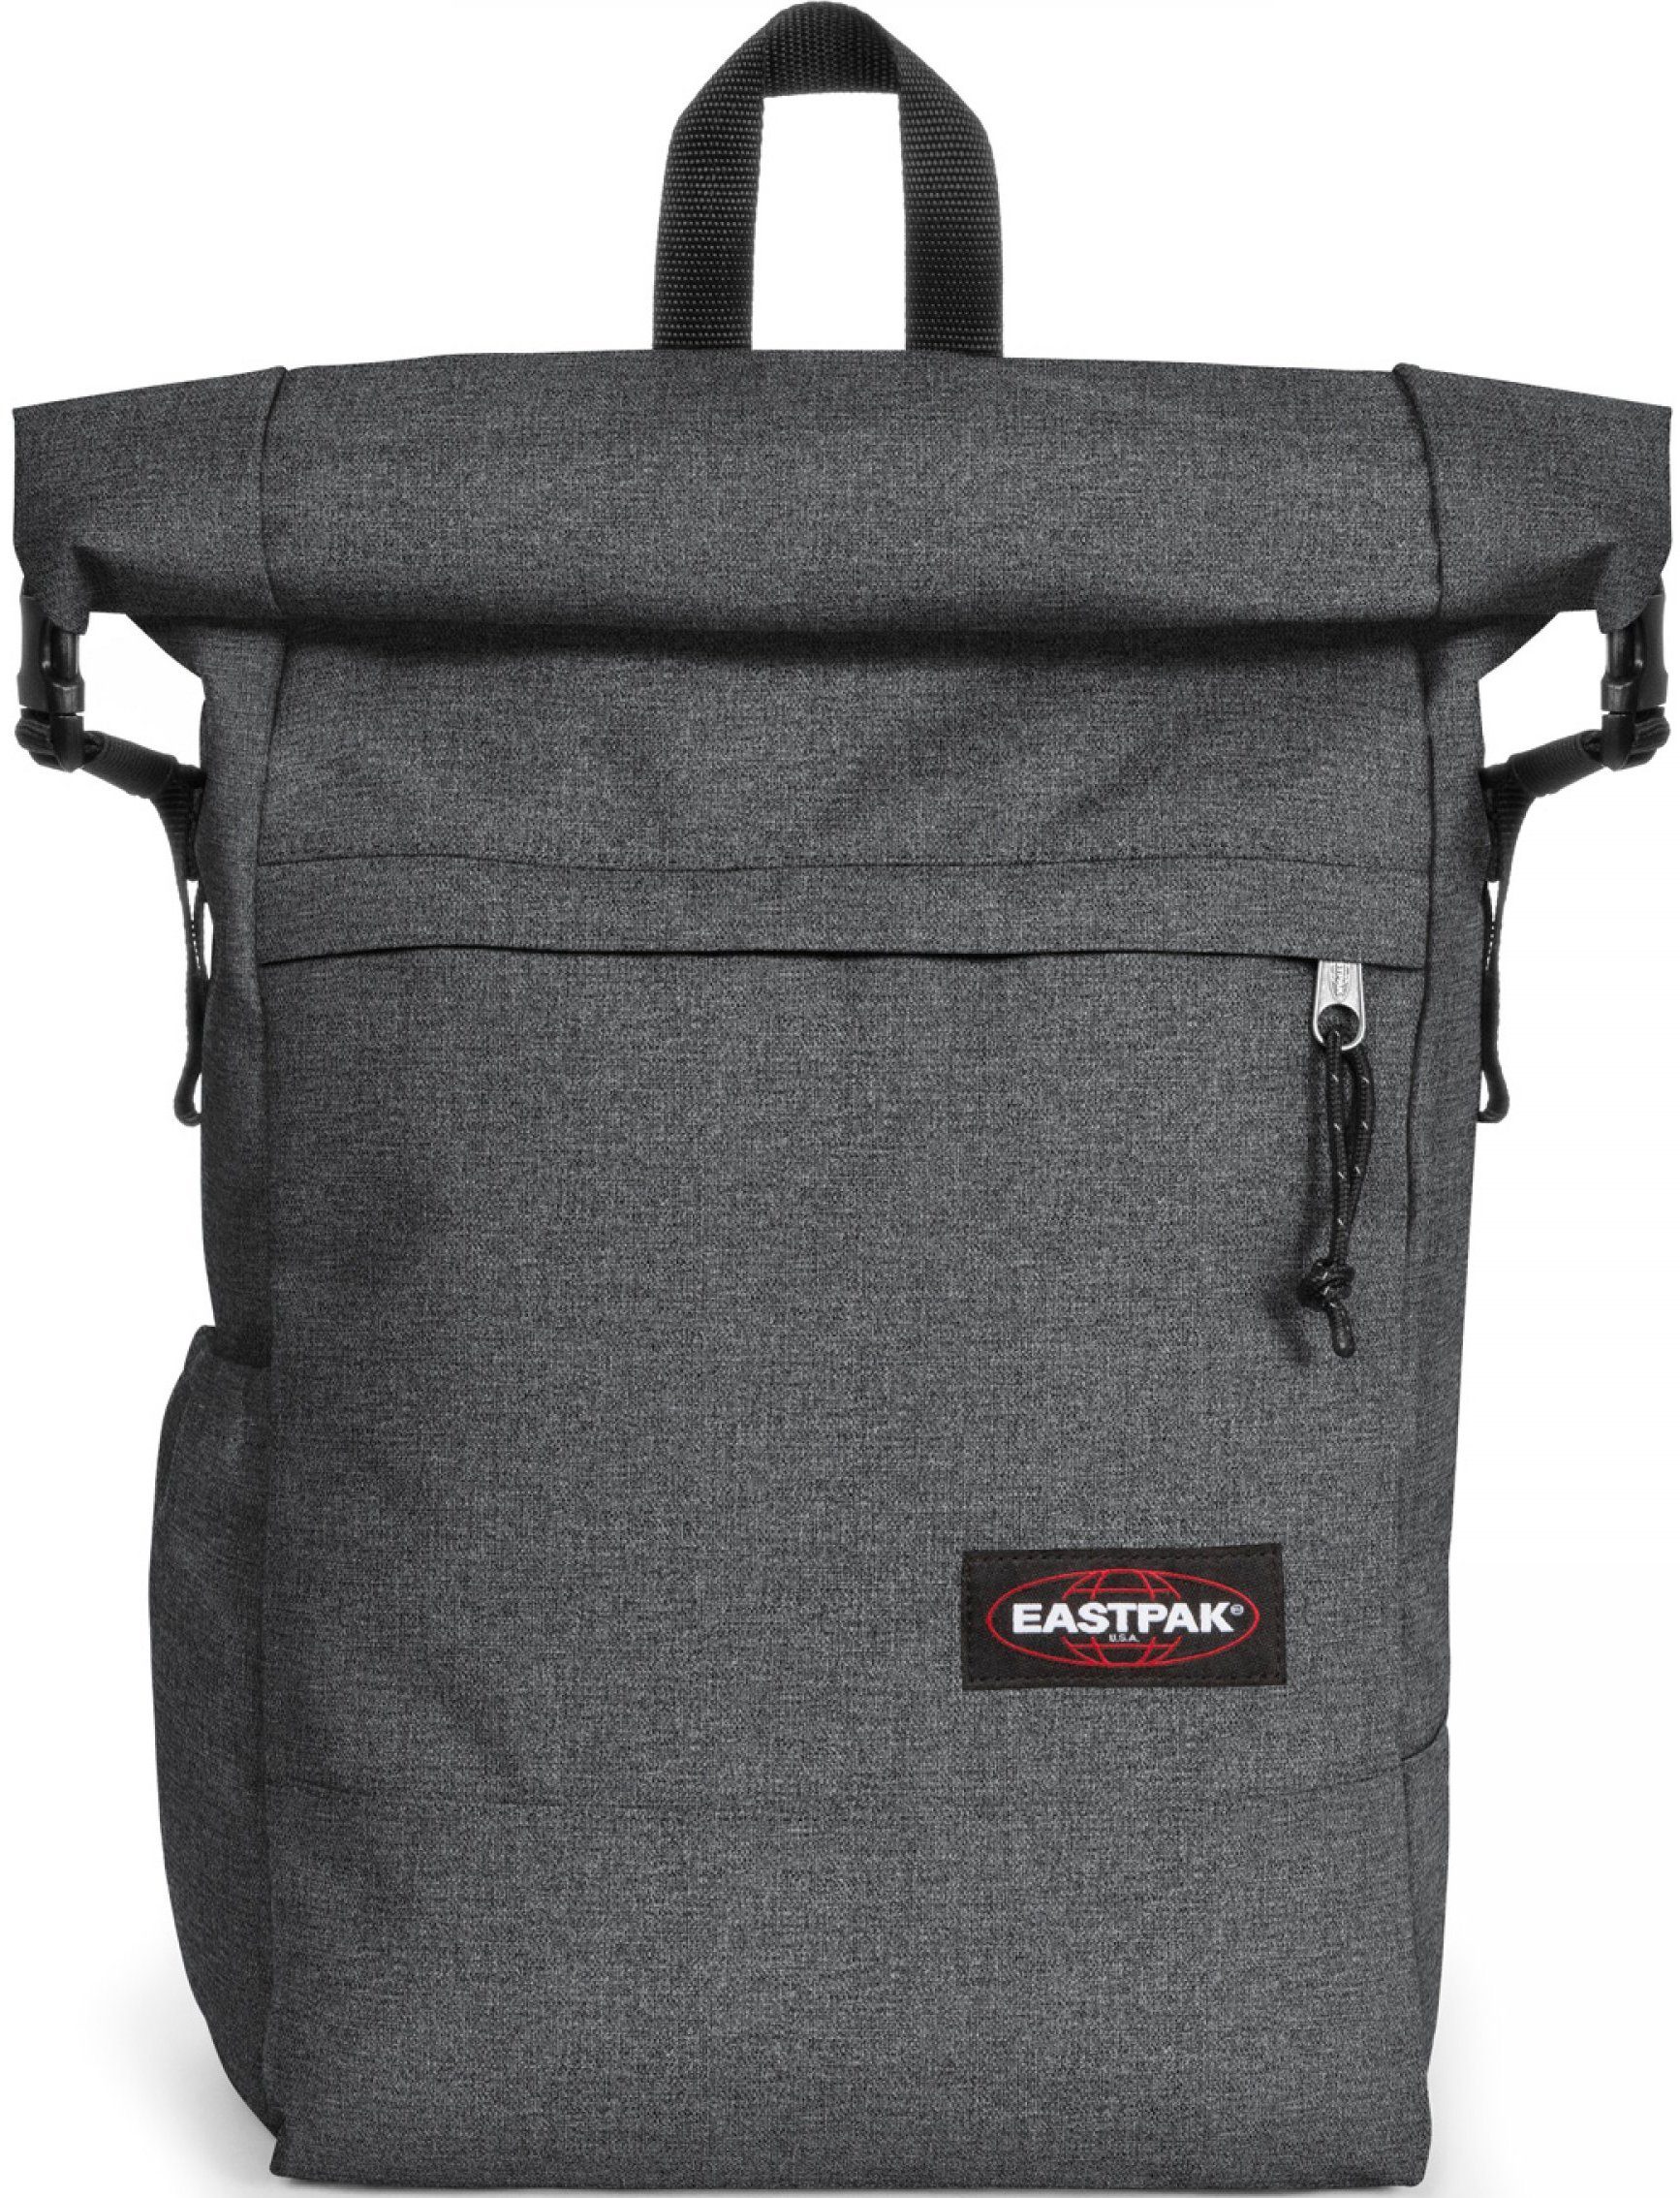 Eastpak Daypack »Chester«, Polyester online kaufen | OTTO